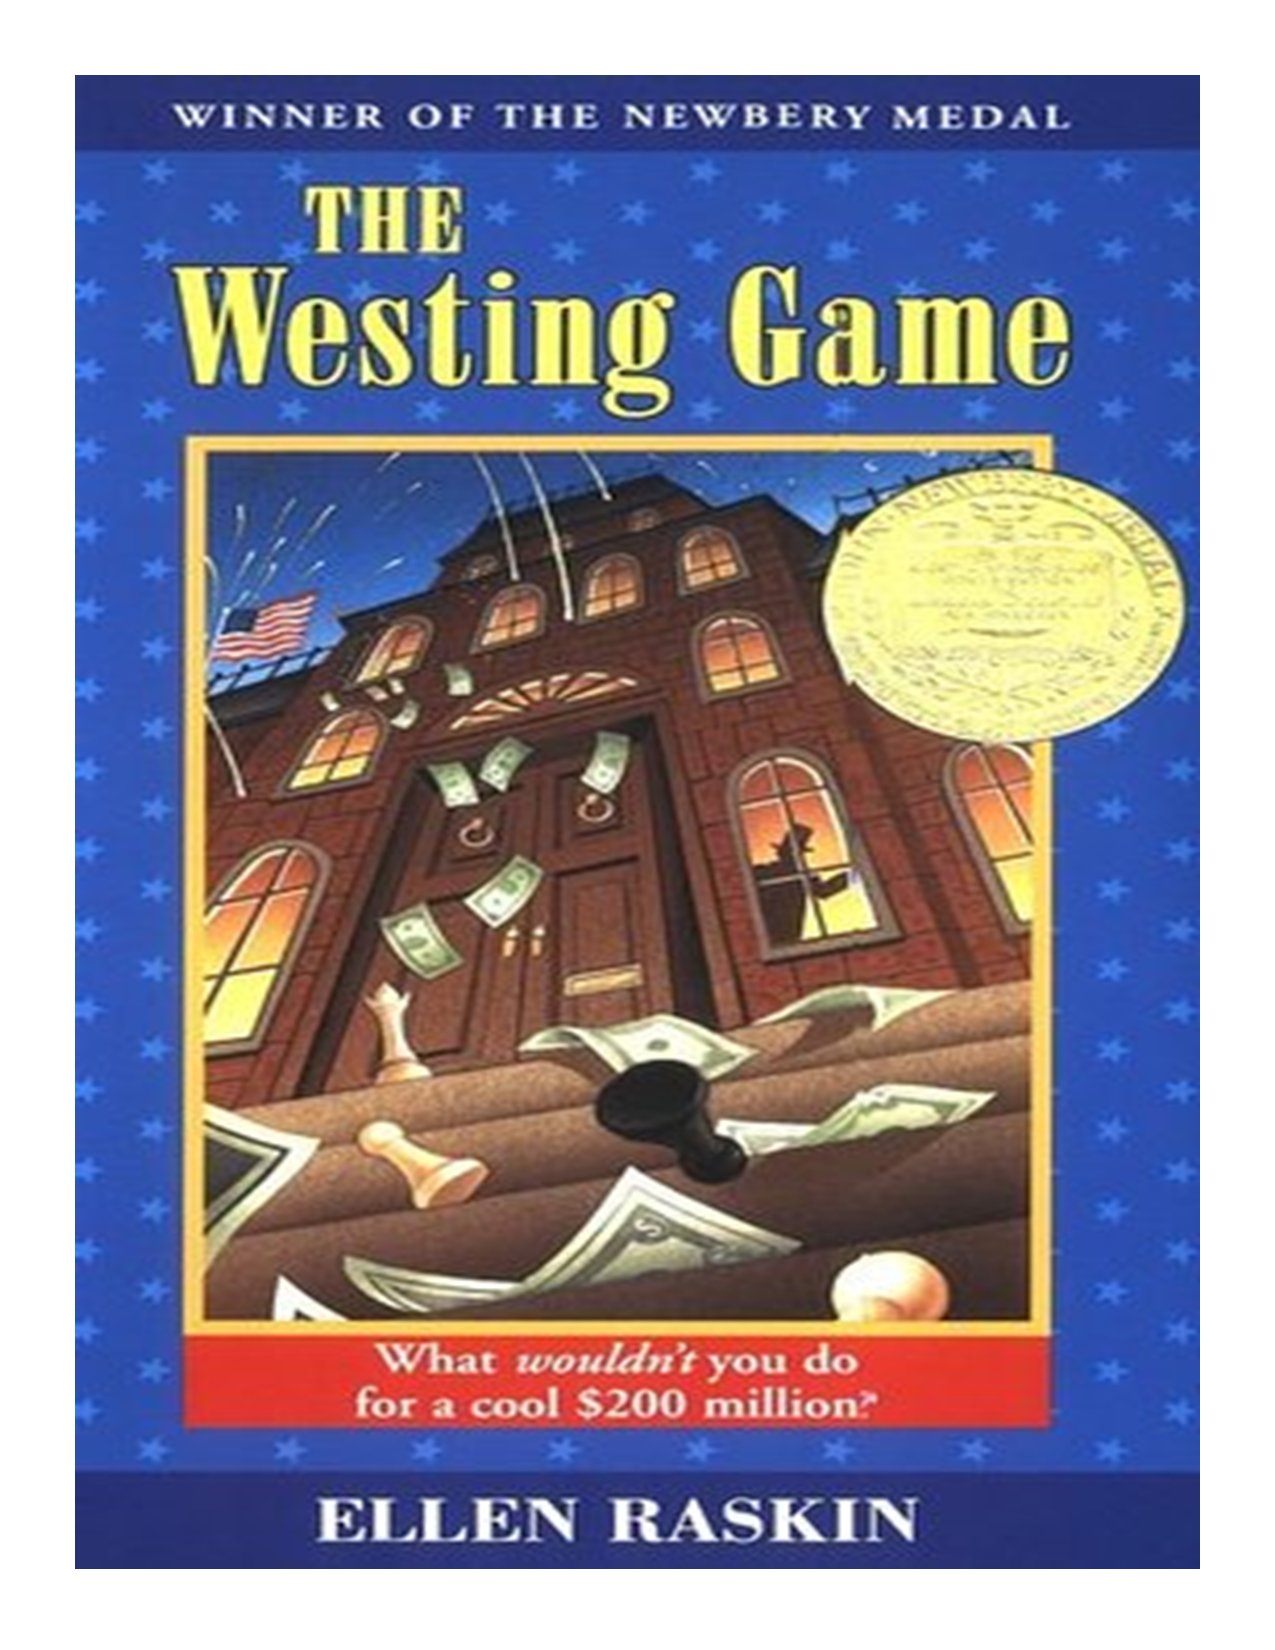 The Westing Game by Ellen Raskin.